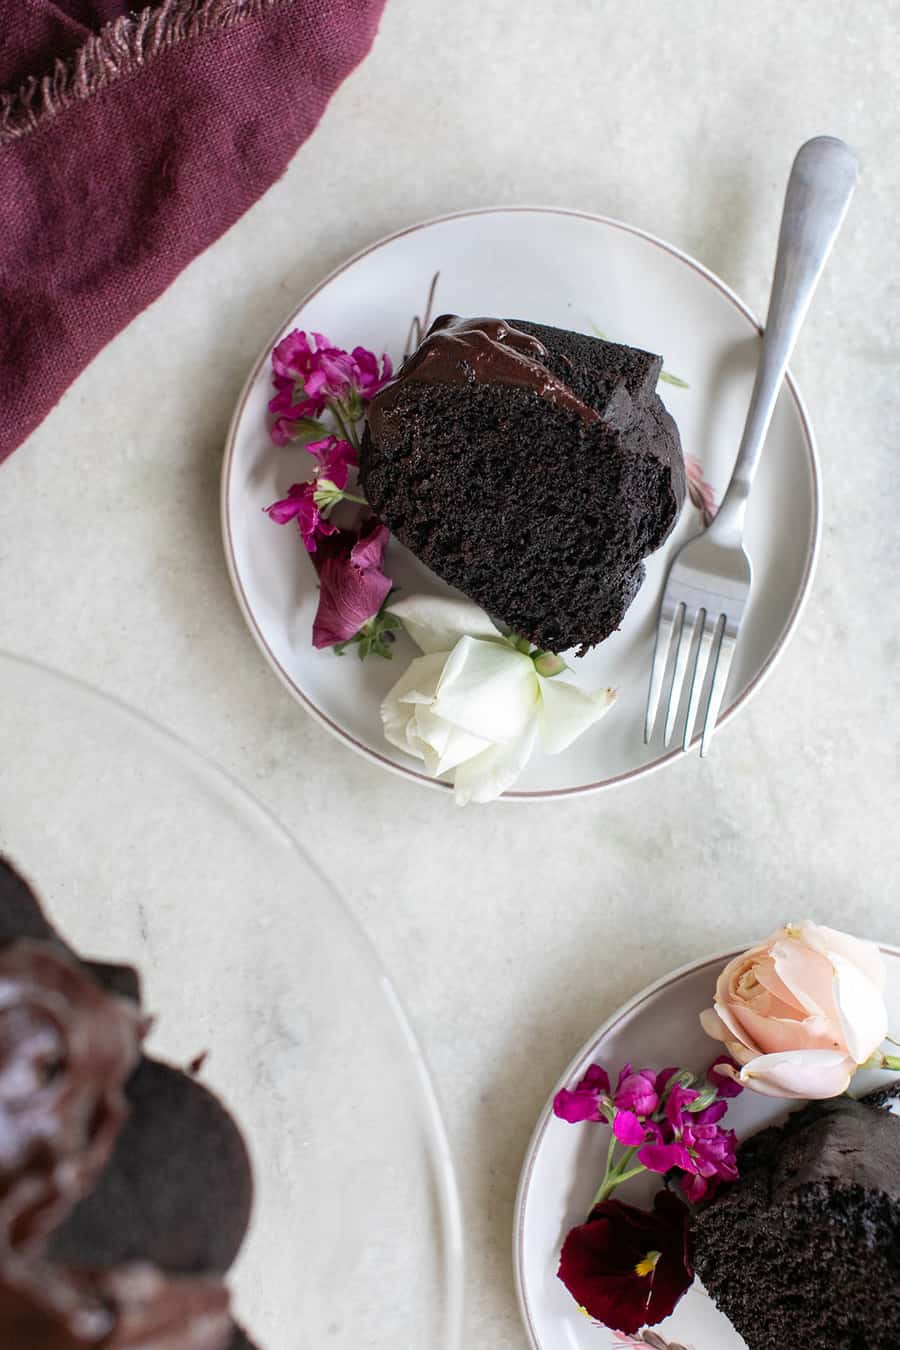 Slice of chocolate cake with chocolate ganache